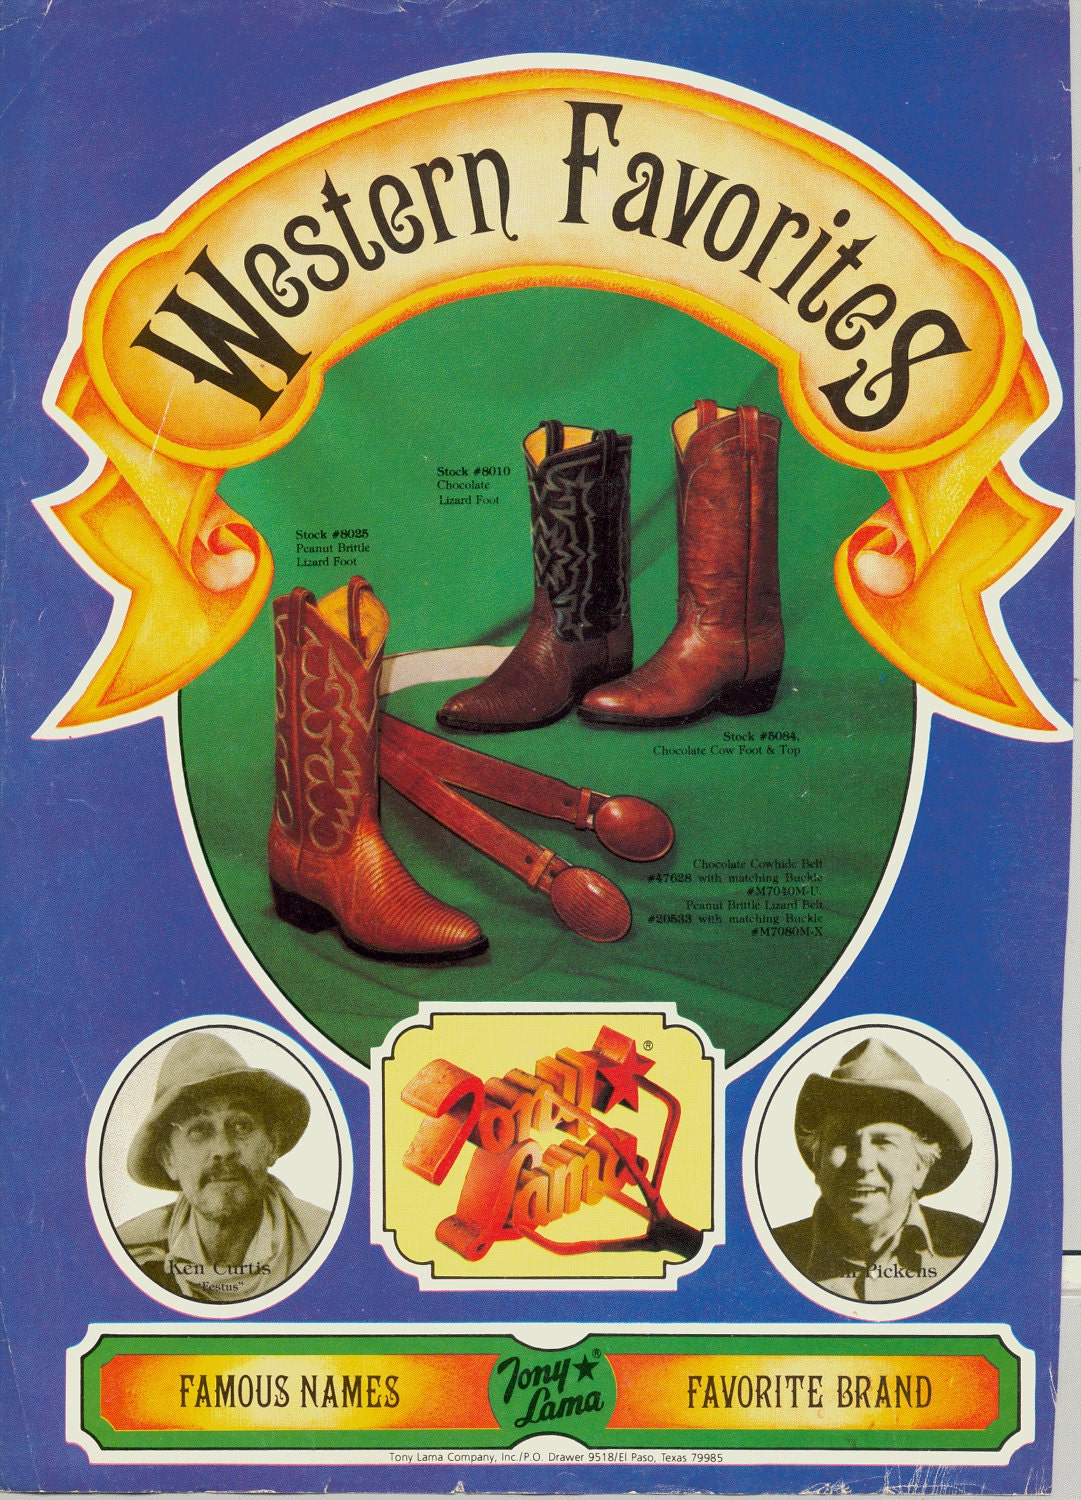 Vintage Magazine Ad for Western Favorites Tony Lama Cowboy Boots